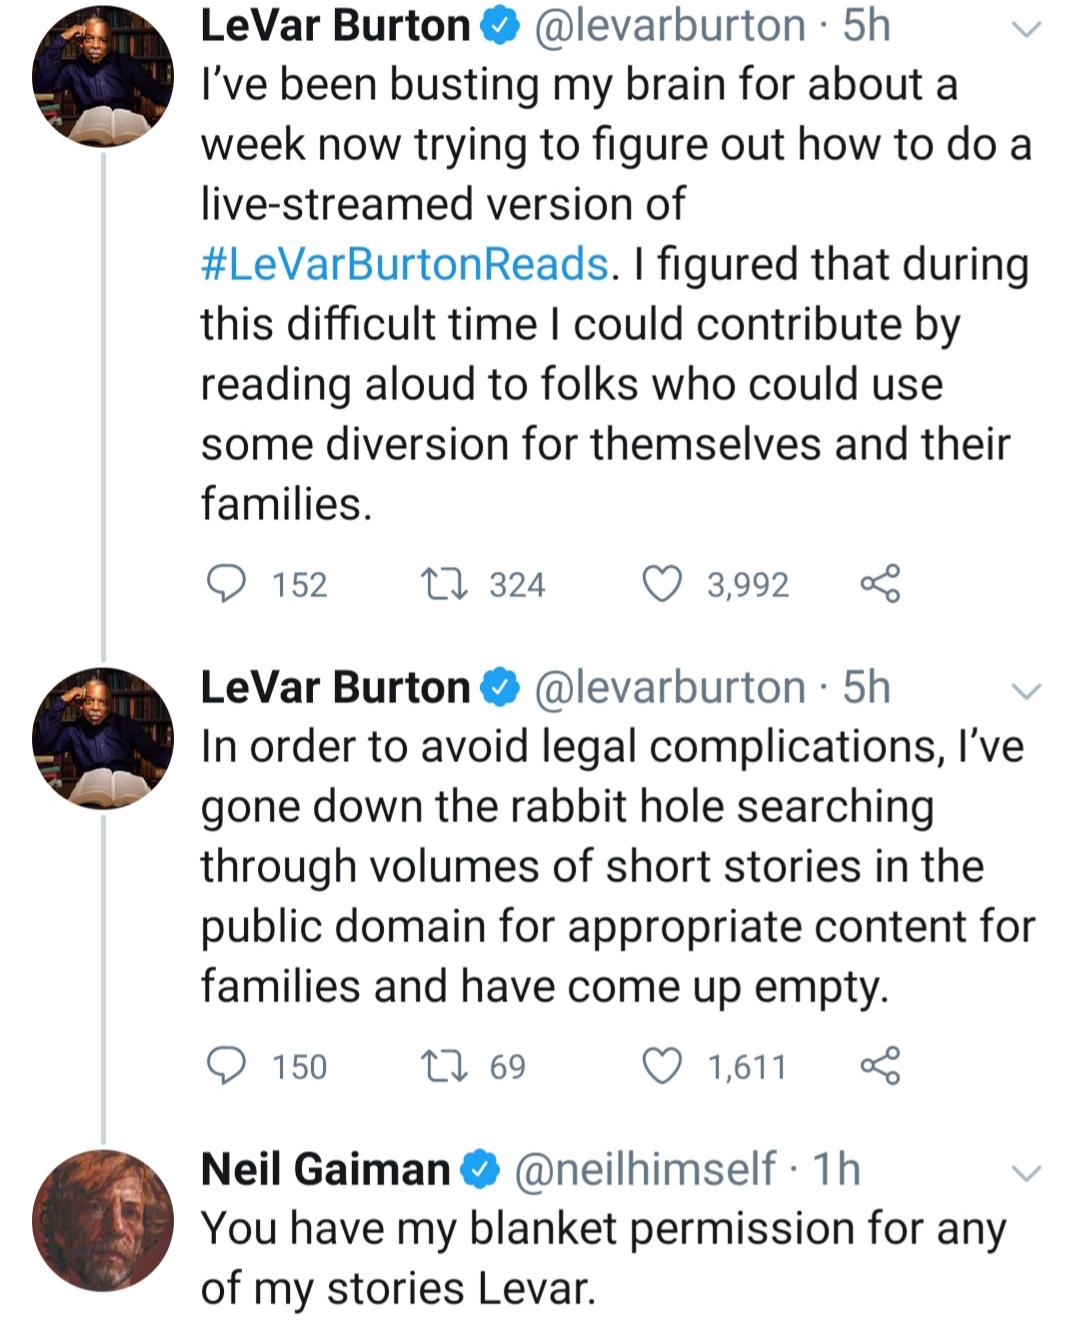 Neil Gaiman and LeVar Burton wheeling and dealing copyright deals.